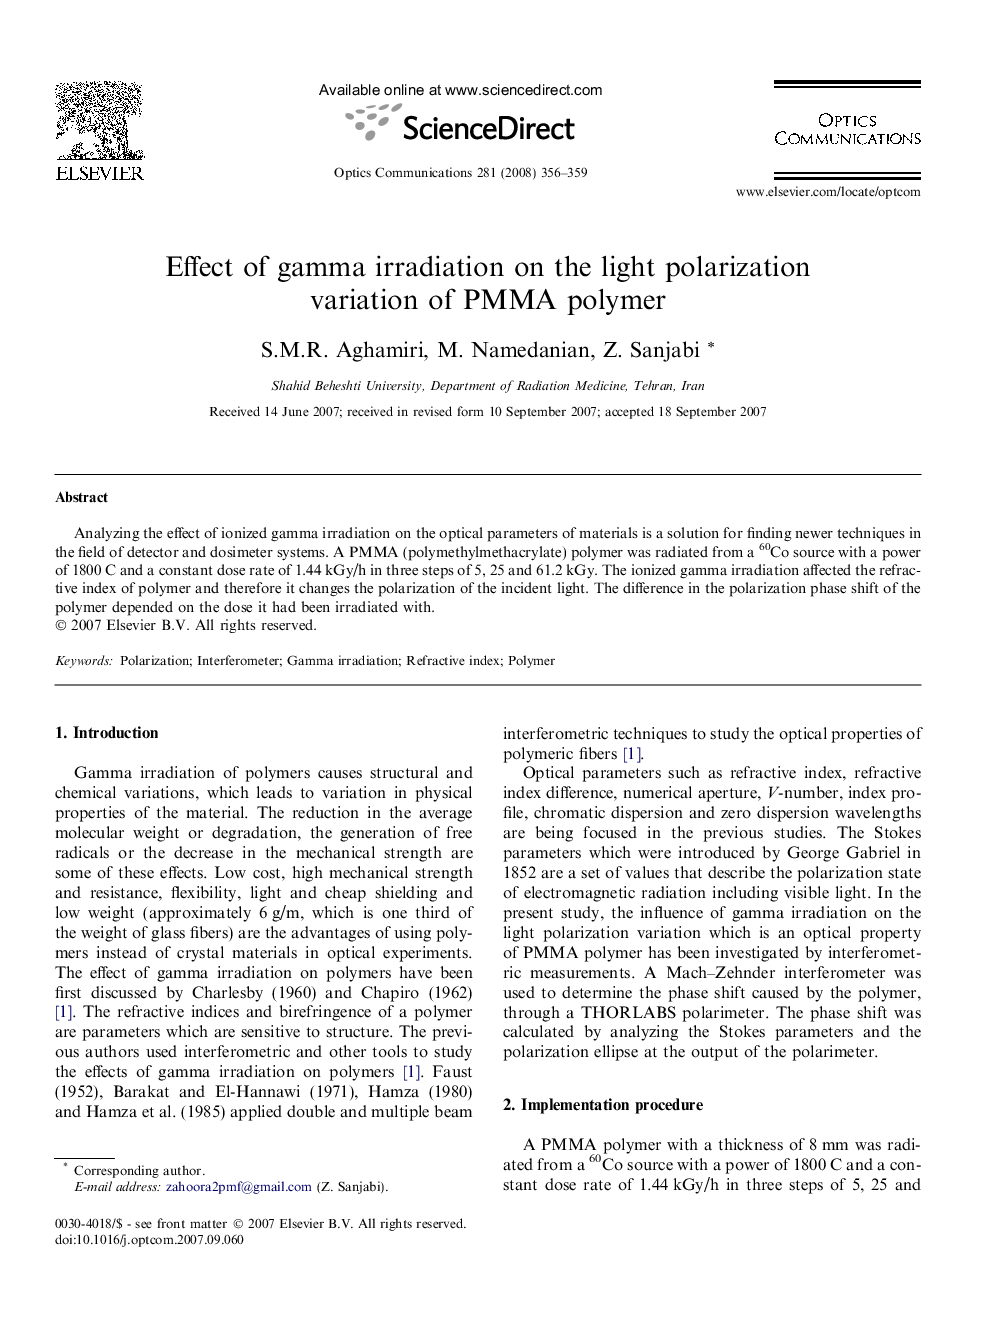 Effect of gamma irradiation on the light polarization variation of PMMA polymer